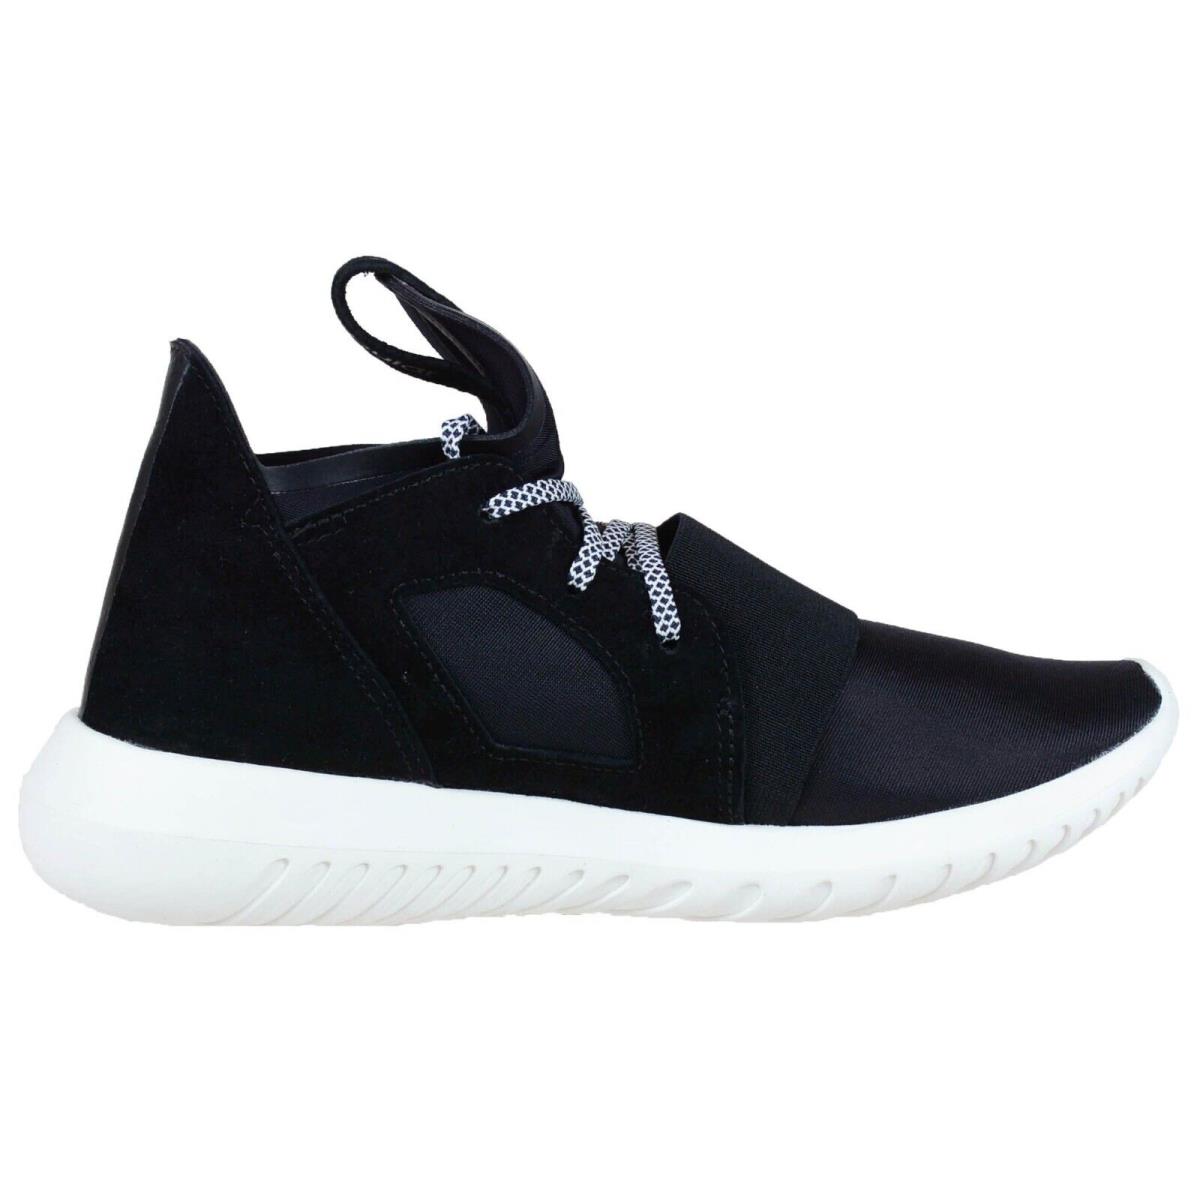 Adidas Tubular Defiant S75903 Women`s Black/white Running Shoes Size 6.5 HS4061